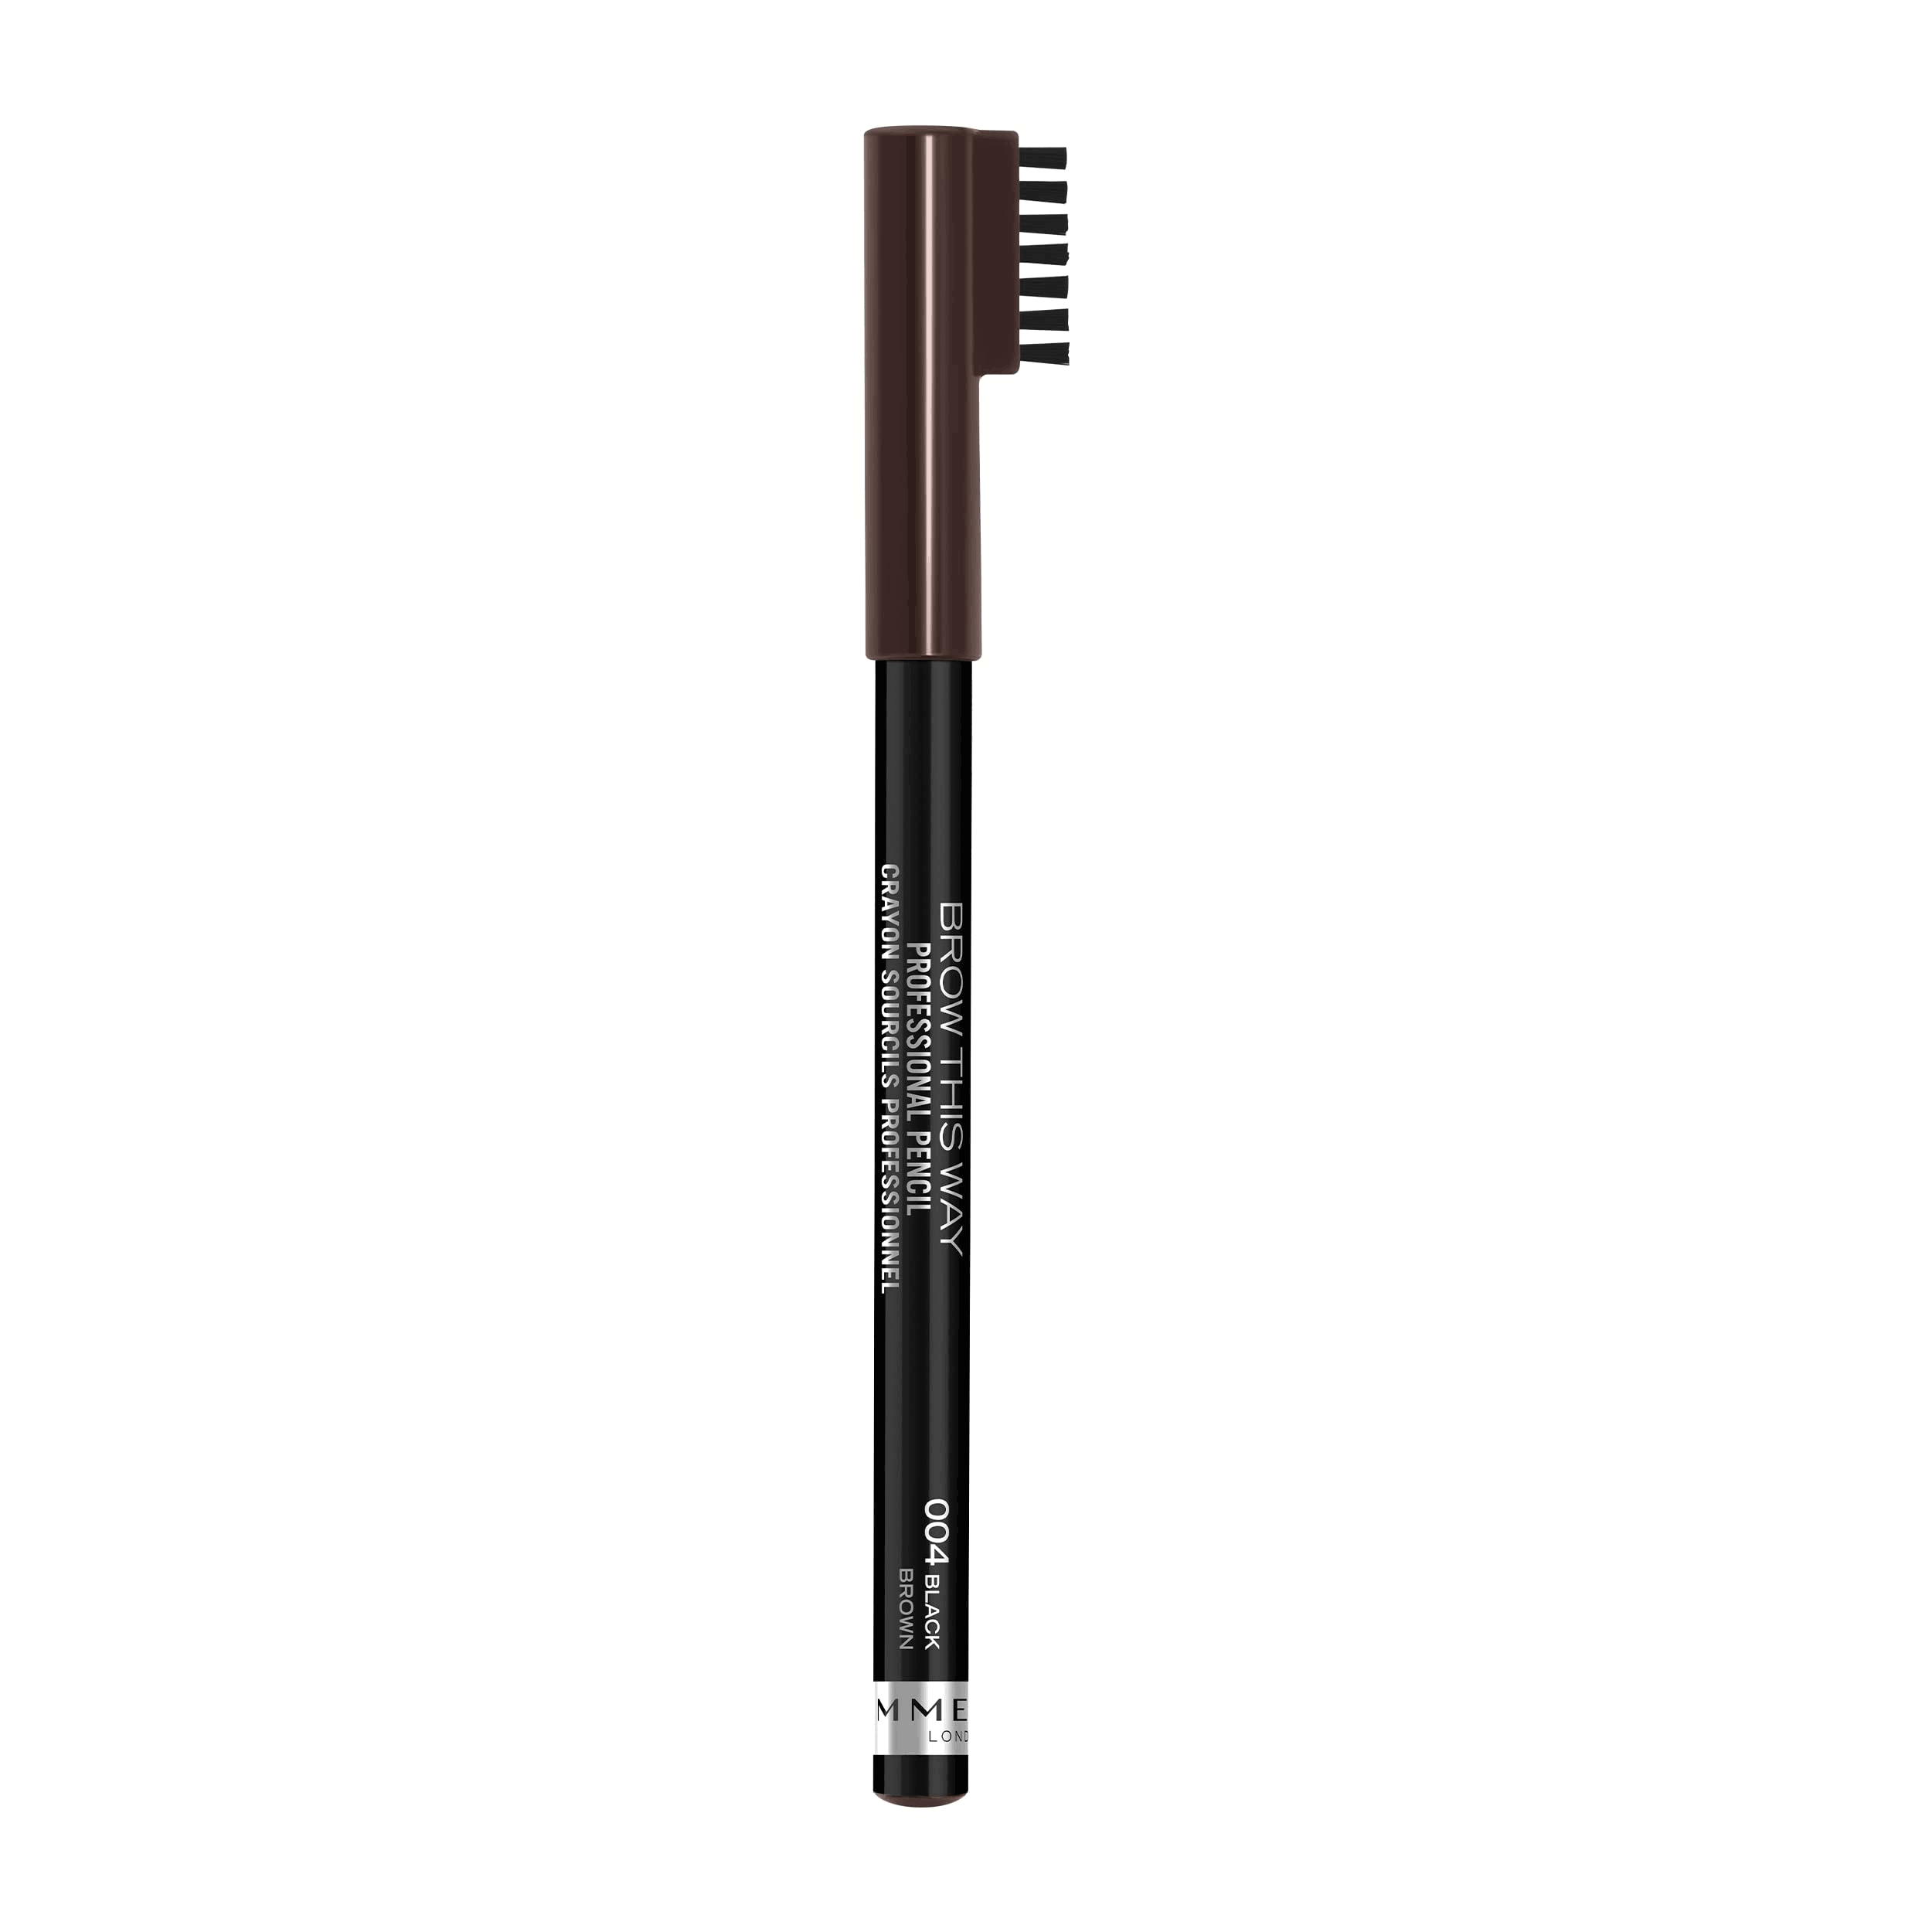 Rimmel London Professional Eyebrow Pencil - 004 Black Brown, 1.4g